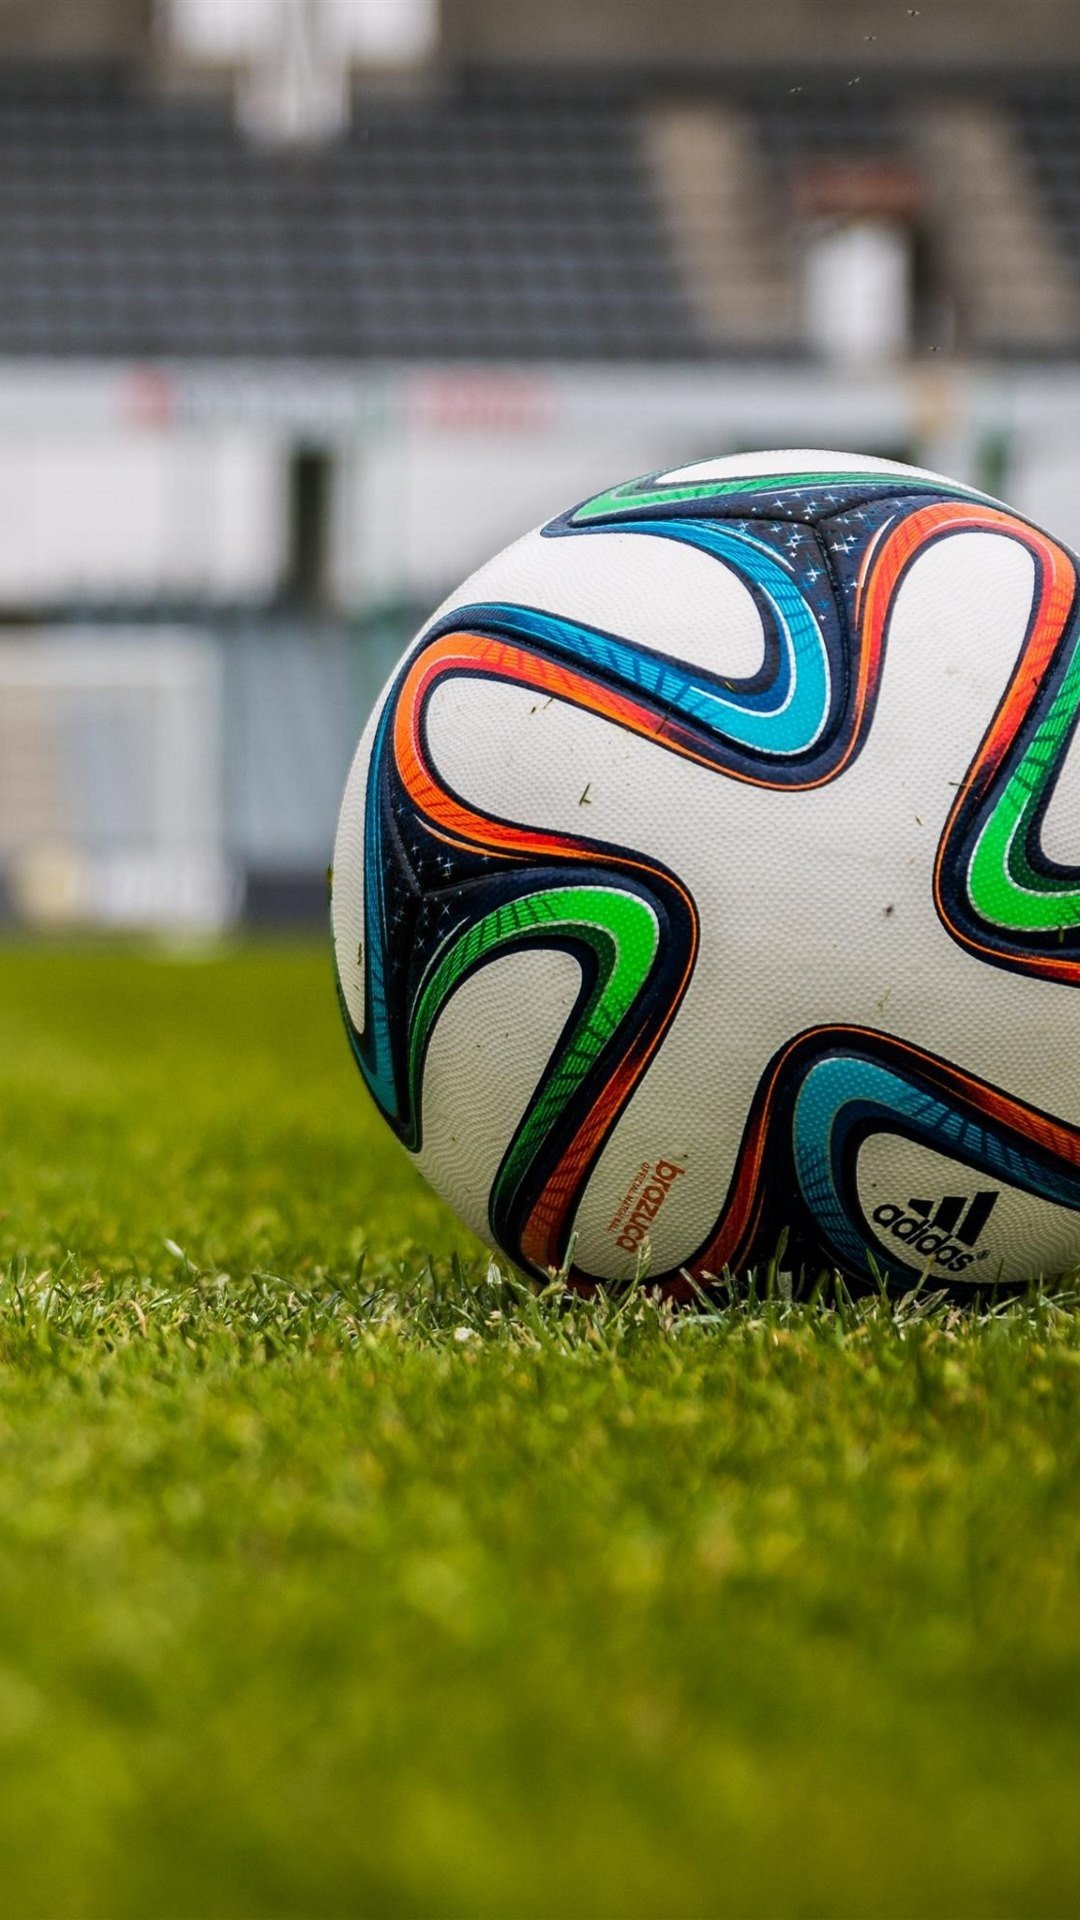 adidas soccer ball wallpaper